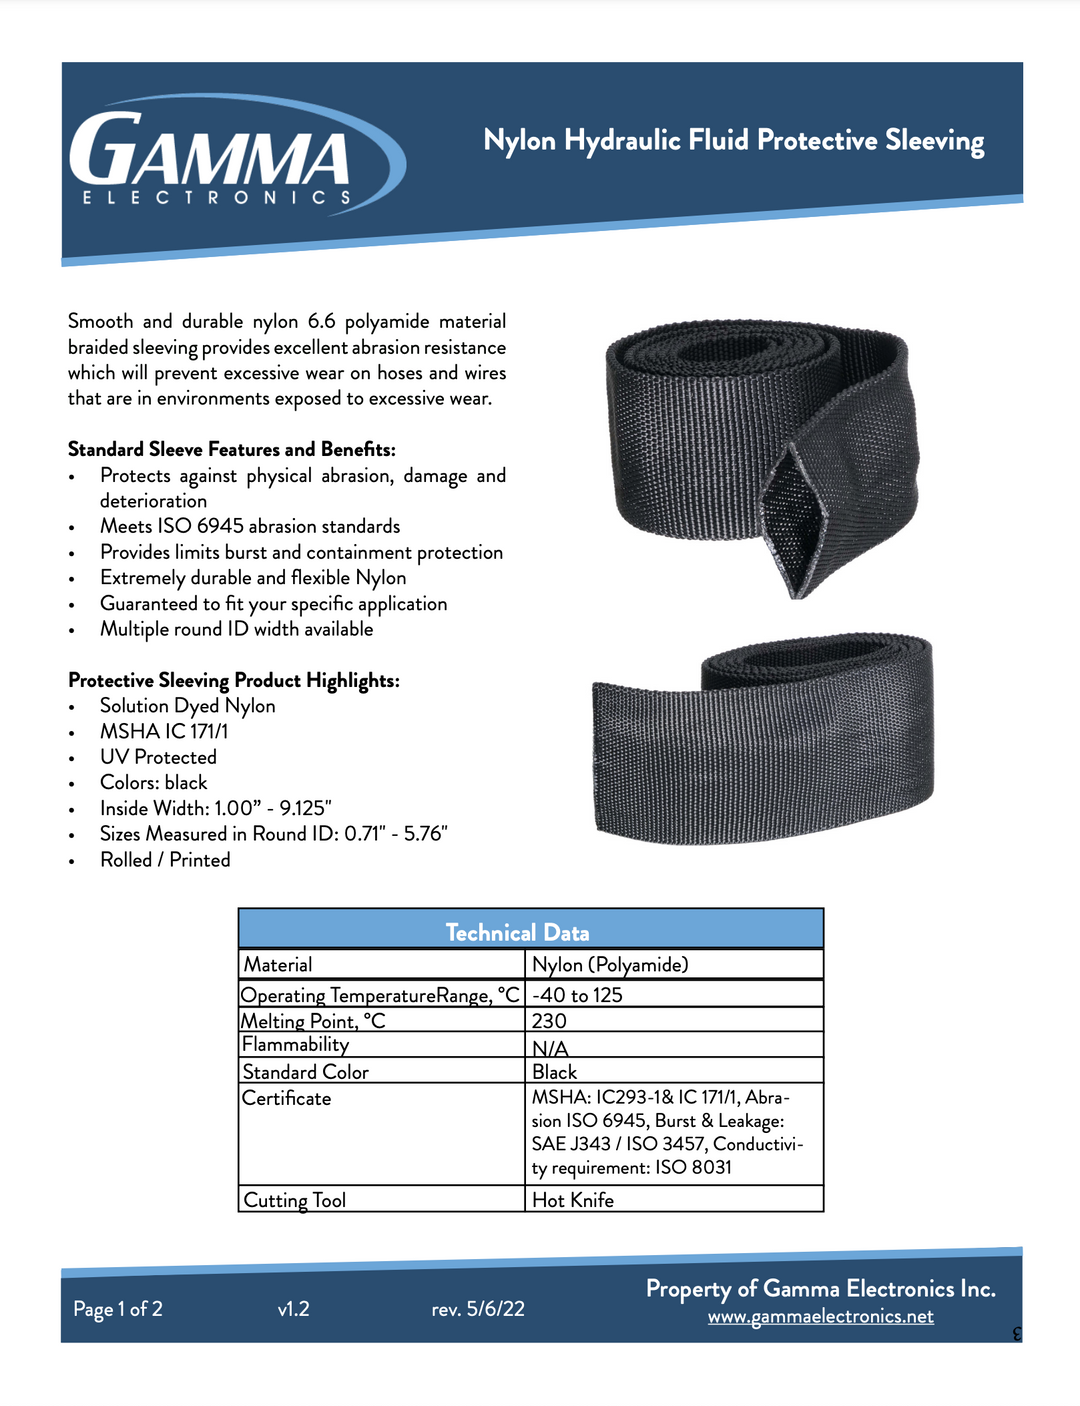 Gamma Braided Nylon Hydraulic Fluid Protective Sleeving - Gamma Electronics